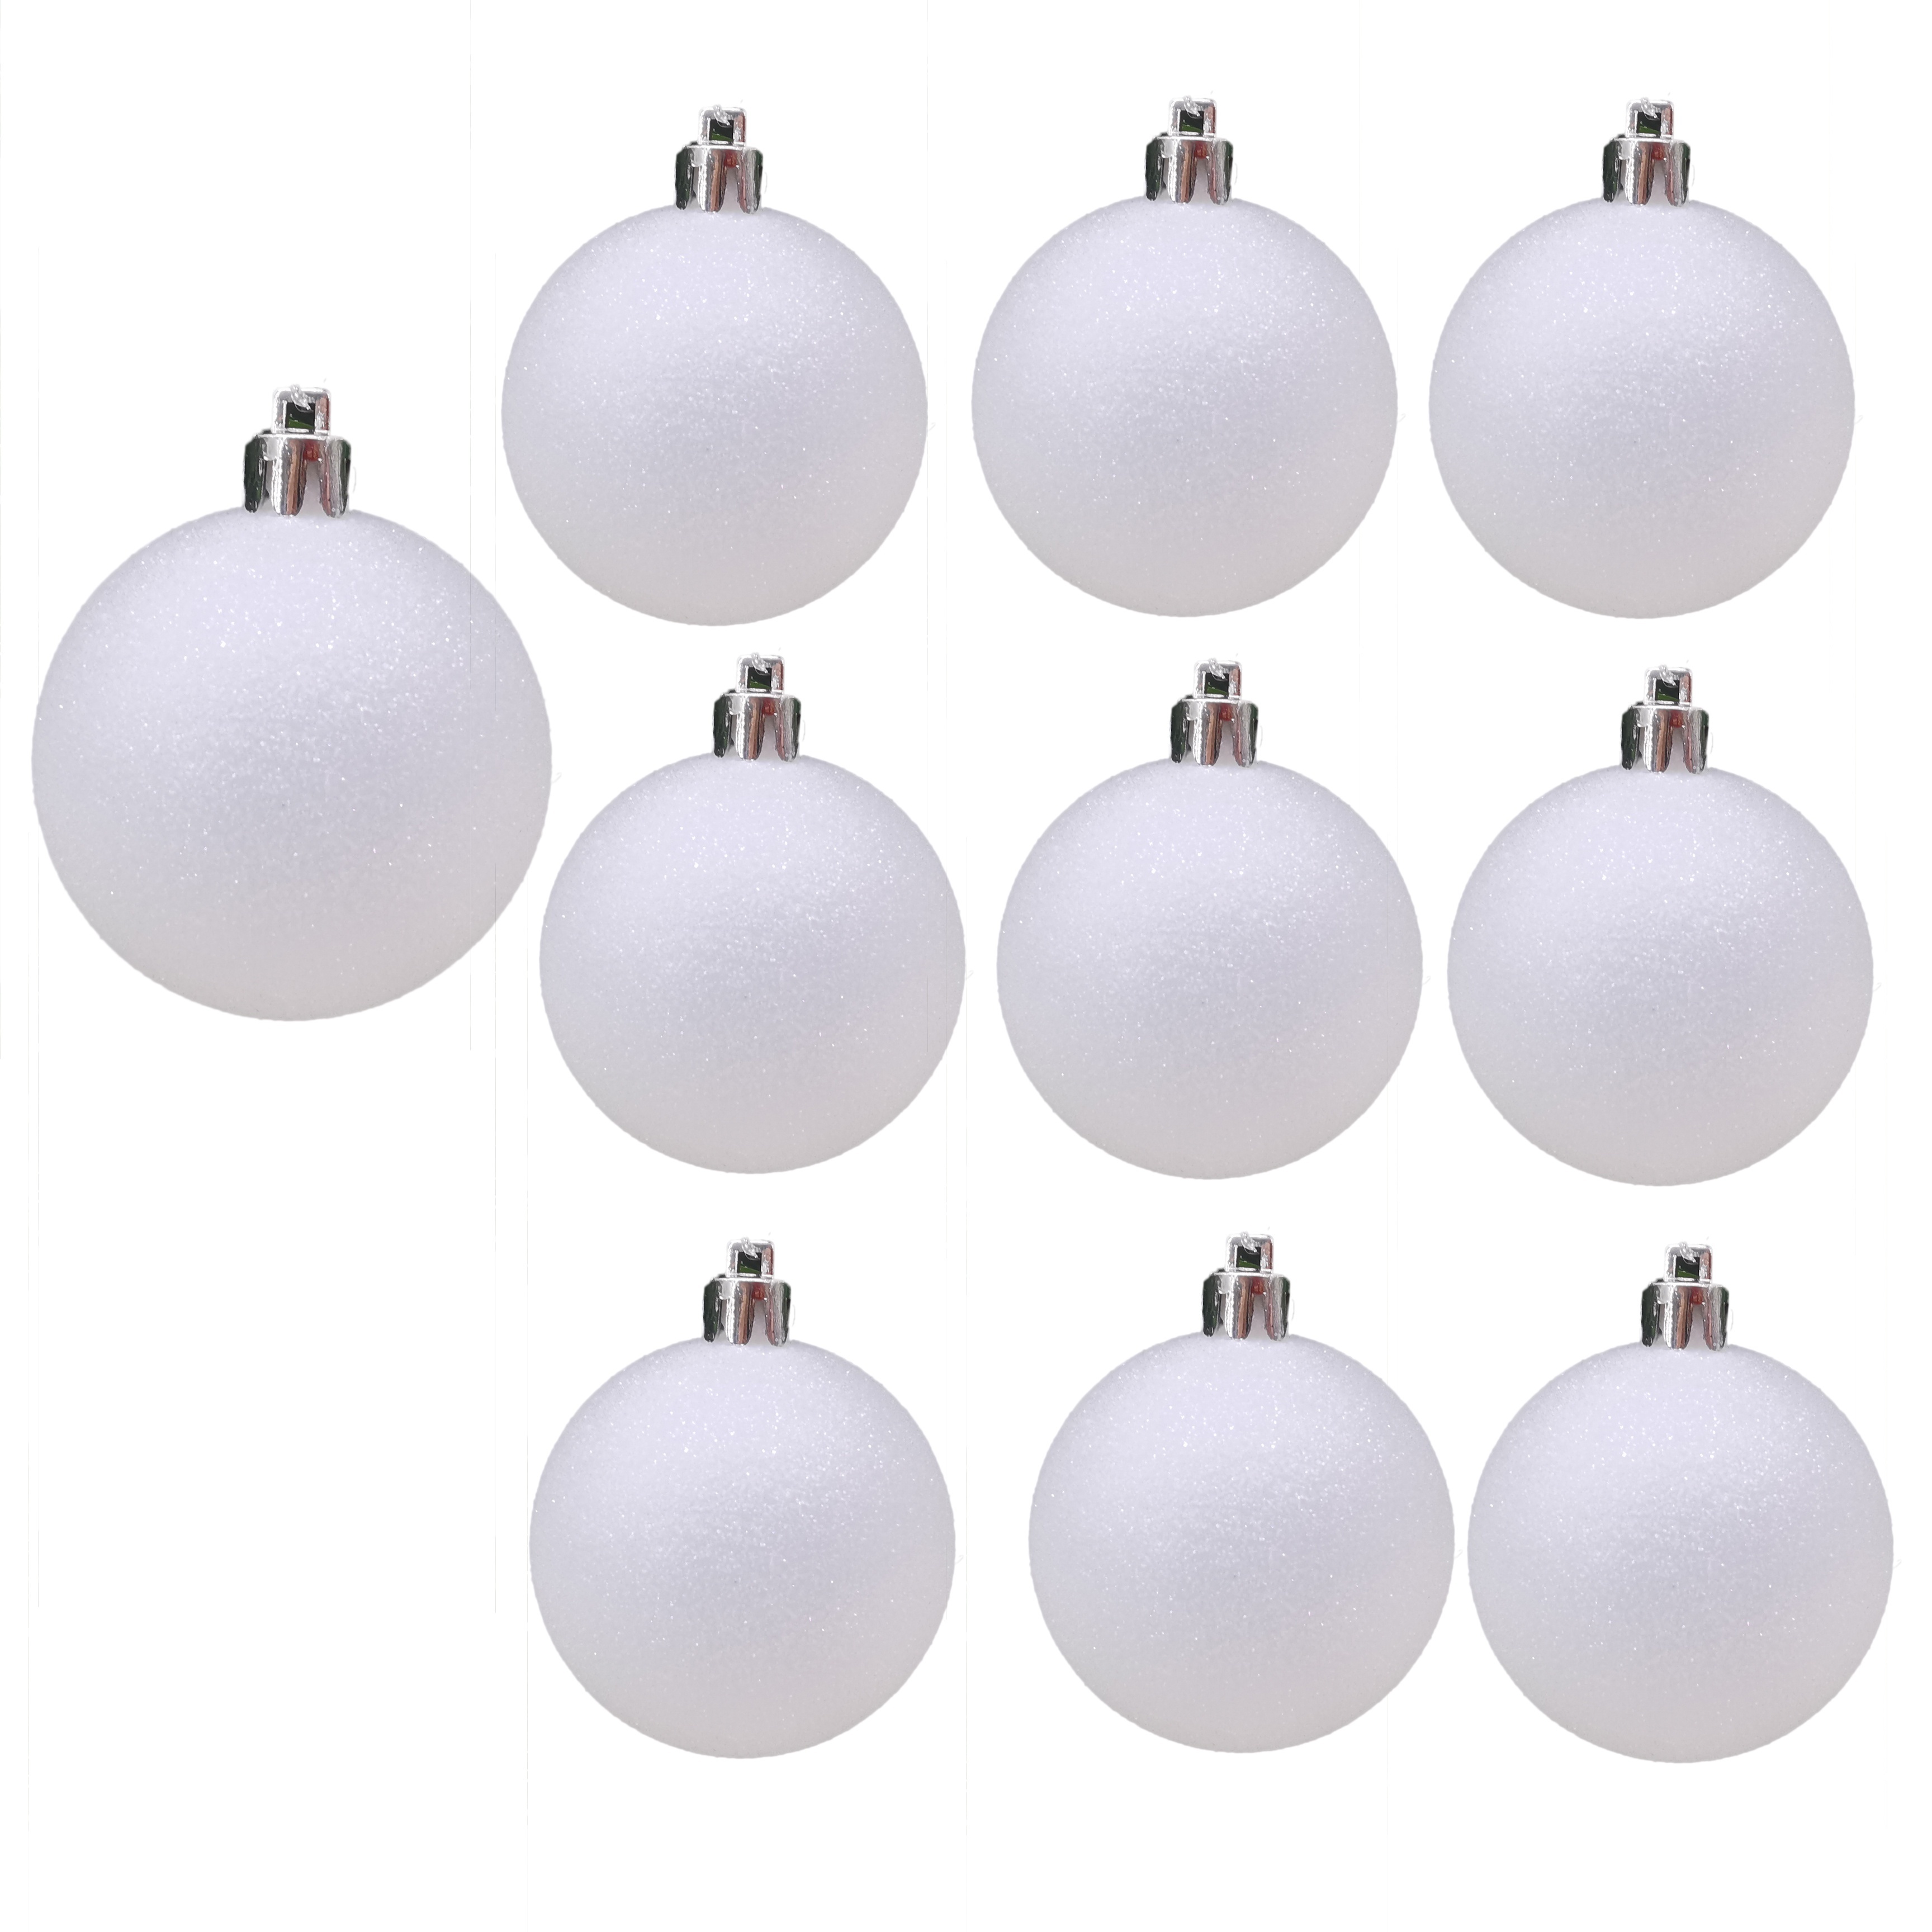 40 Pack Clear Plastic Fillable Ornament,Transparent Plastic Craft Ornament Balls,DIY Bath Bomb Mold for Christmas Tree,Wedding,Party,Home Decor,3